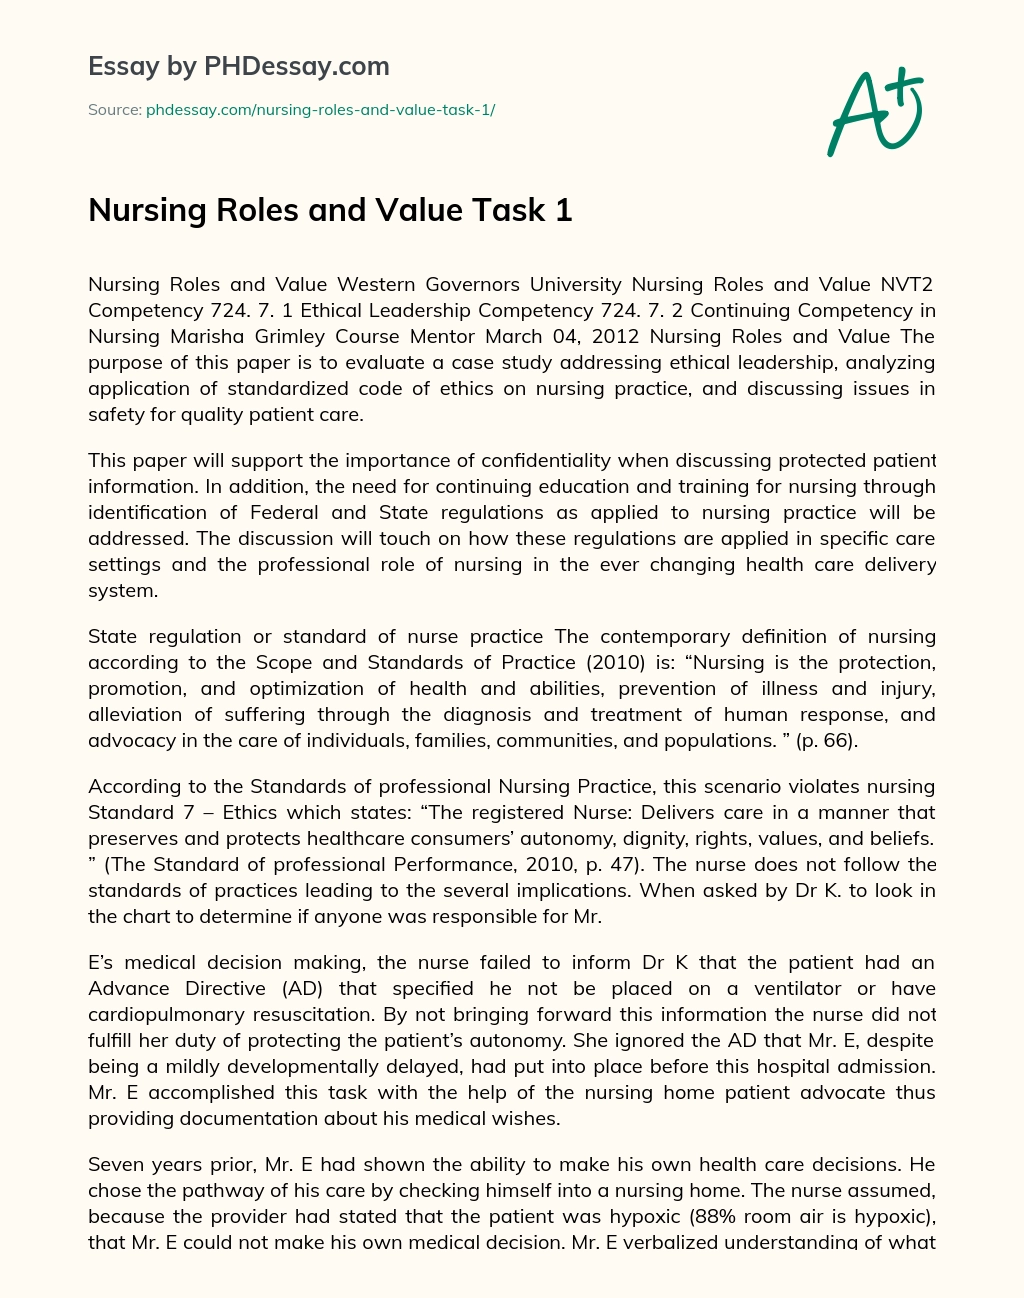 Nursing Roles and Value Task 1 essay